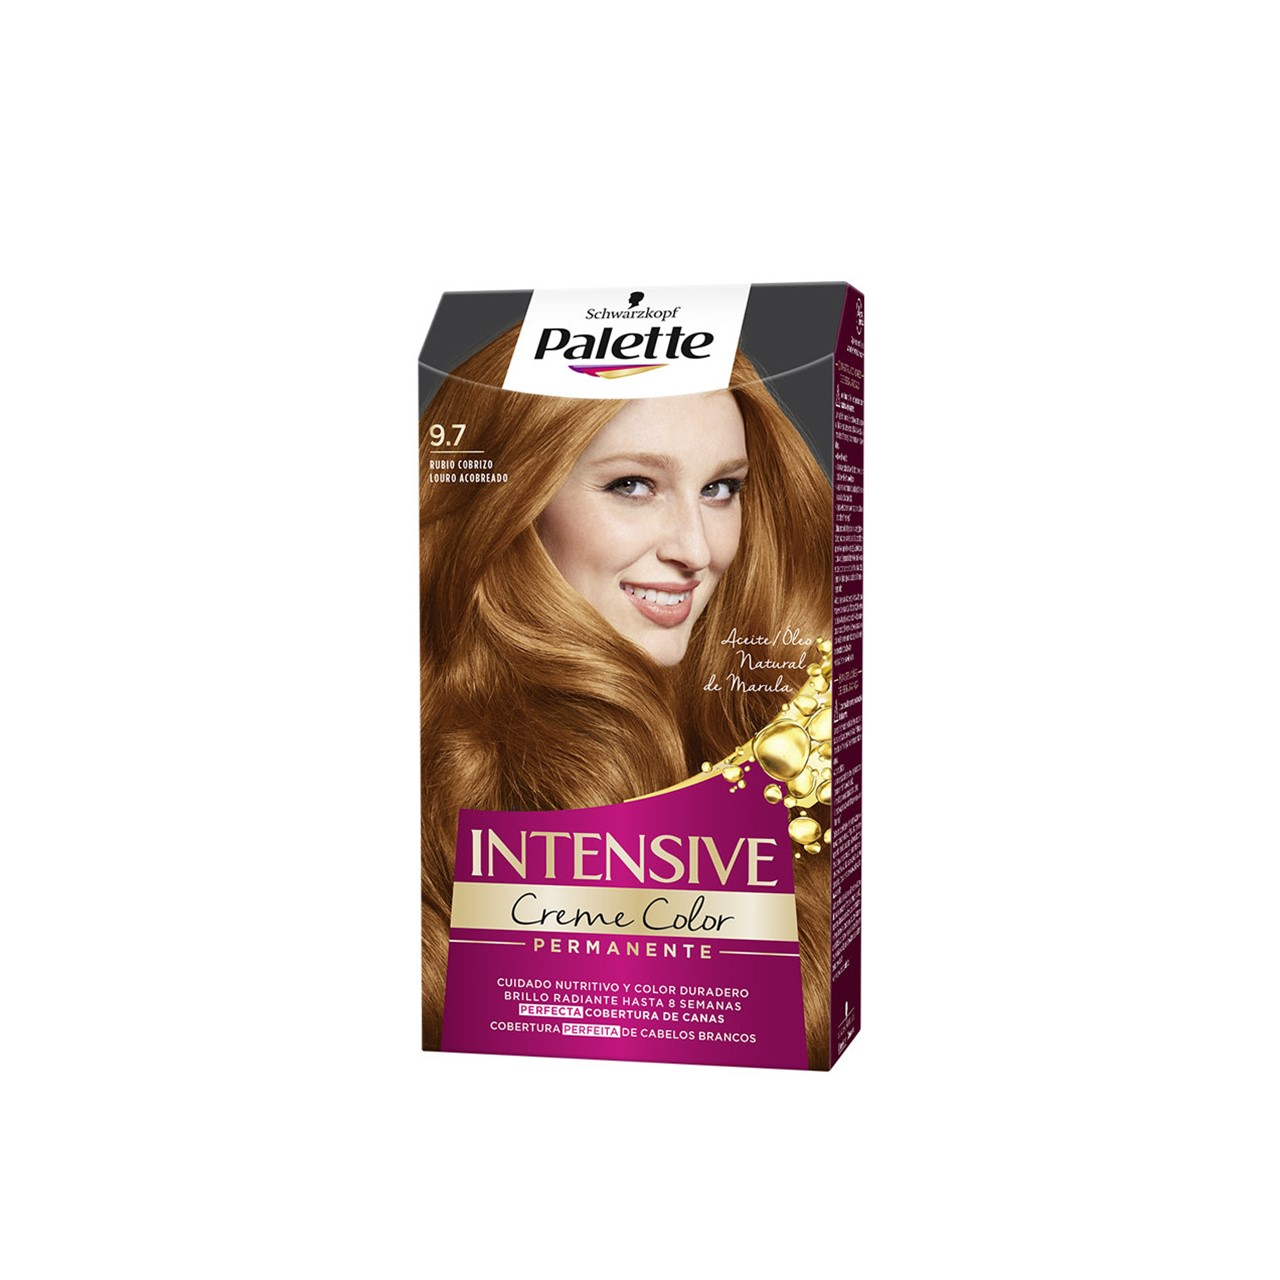 Schwarzkopf Palette Intensive Creme Color Permanent Hair Dye 9.7 Coppery Blonde